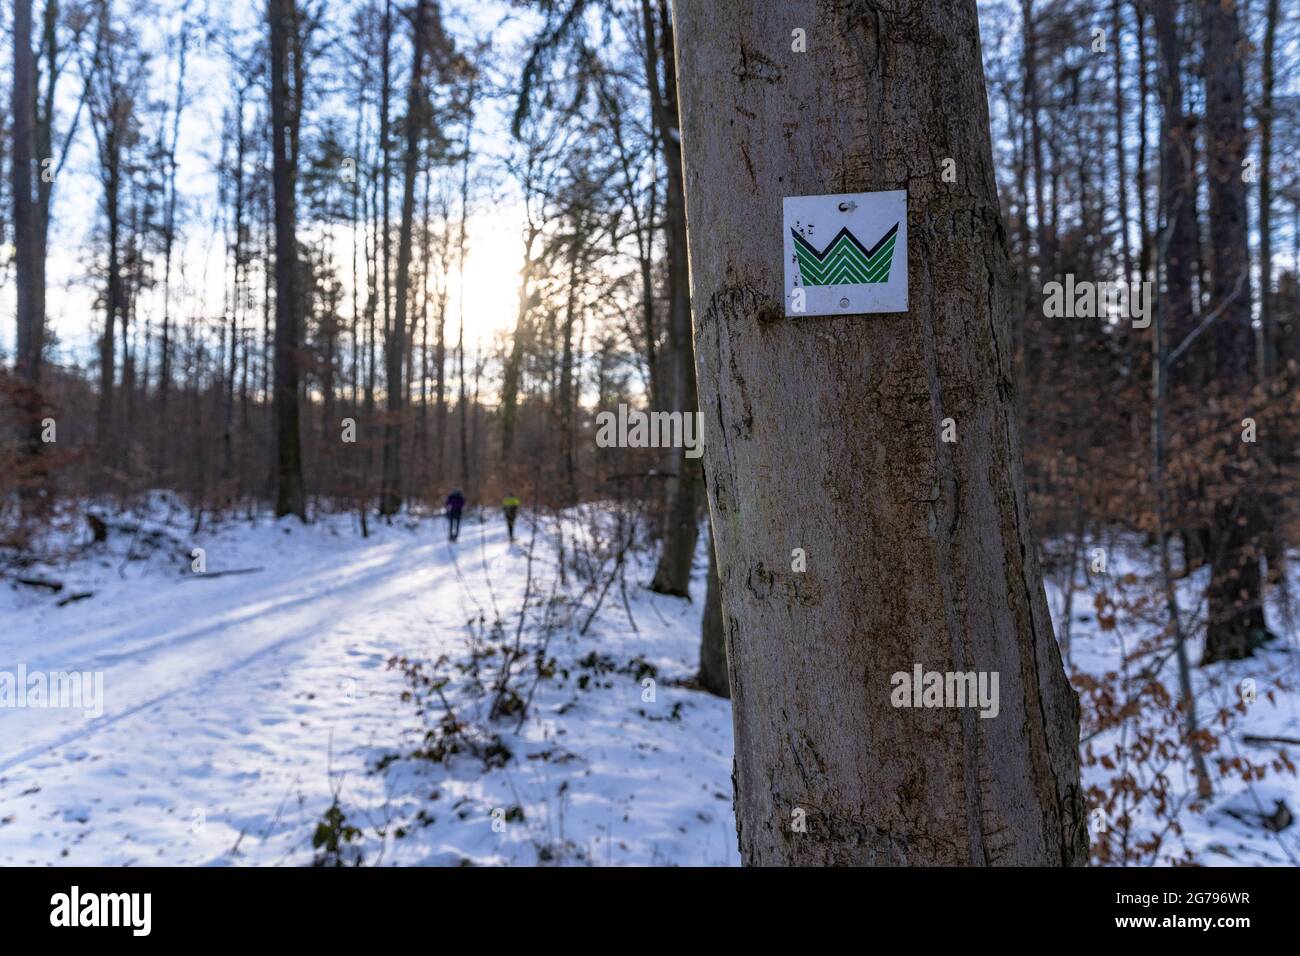 Europe, Germany, Baden-Wuerttemberg, Schönbuch region, Waldenbuch, Herzog-Jäger-Path, path marking on a tree next to the snow-covered forest path Stock Photo